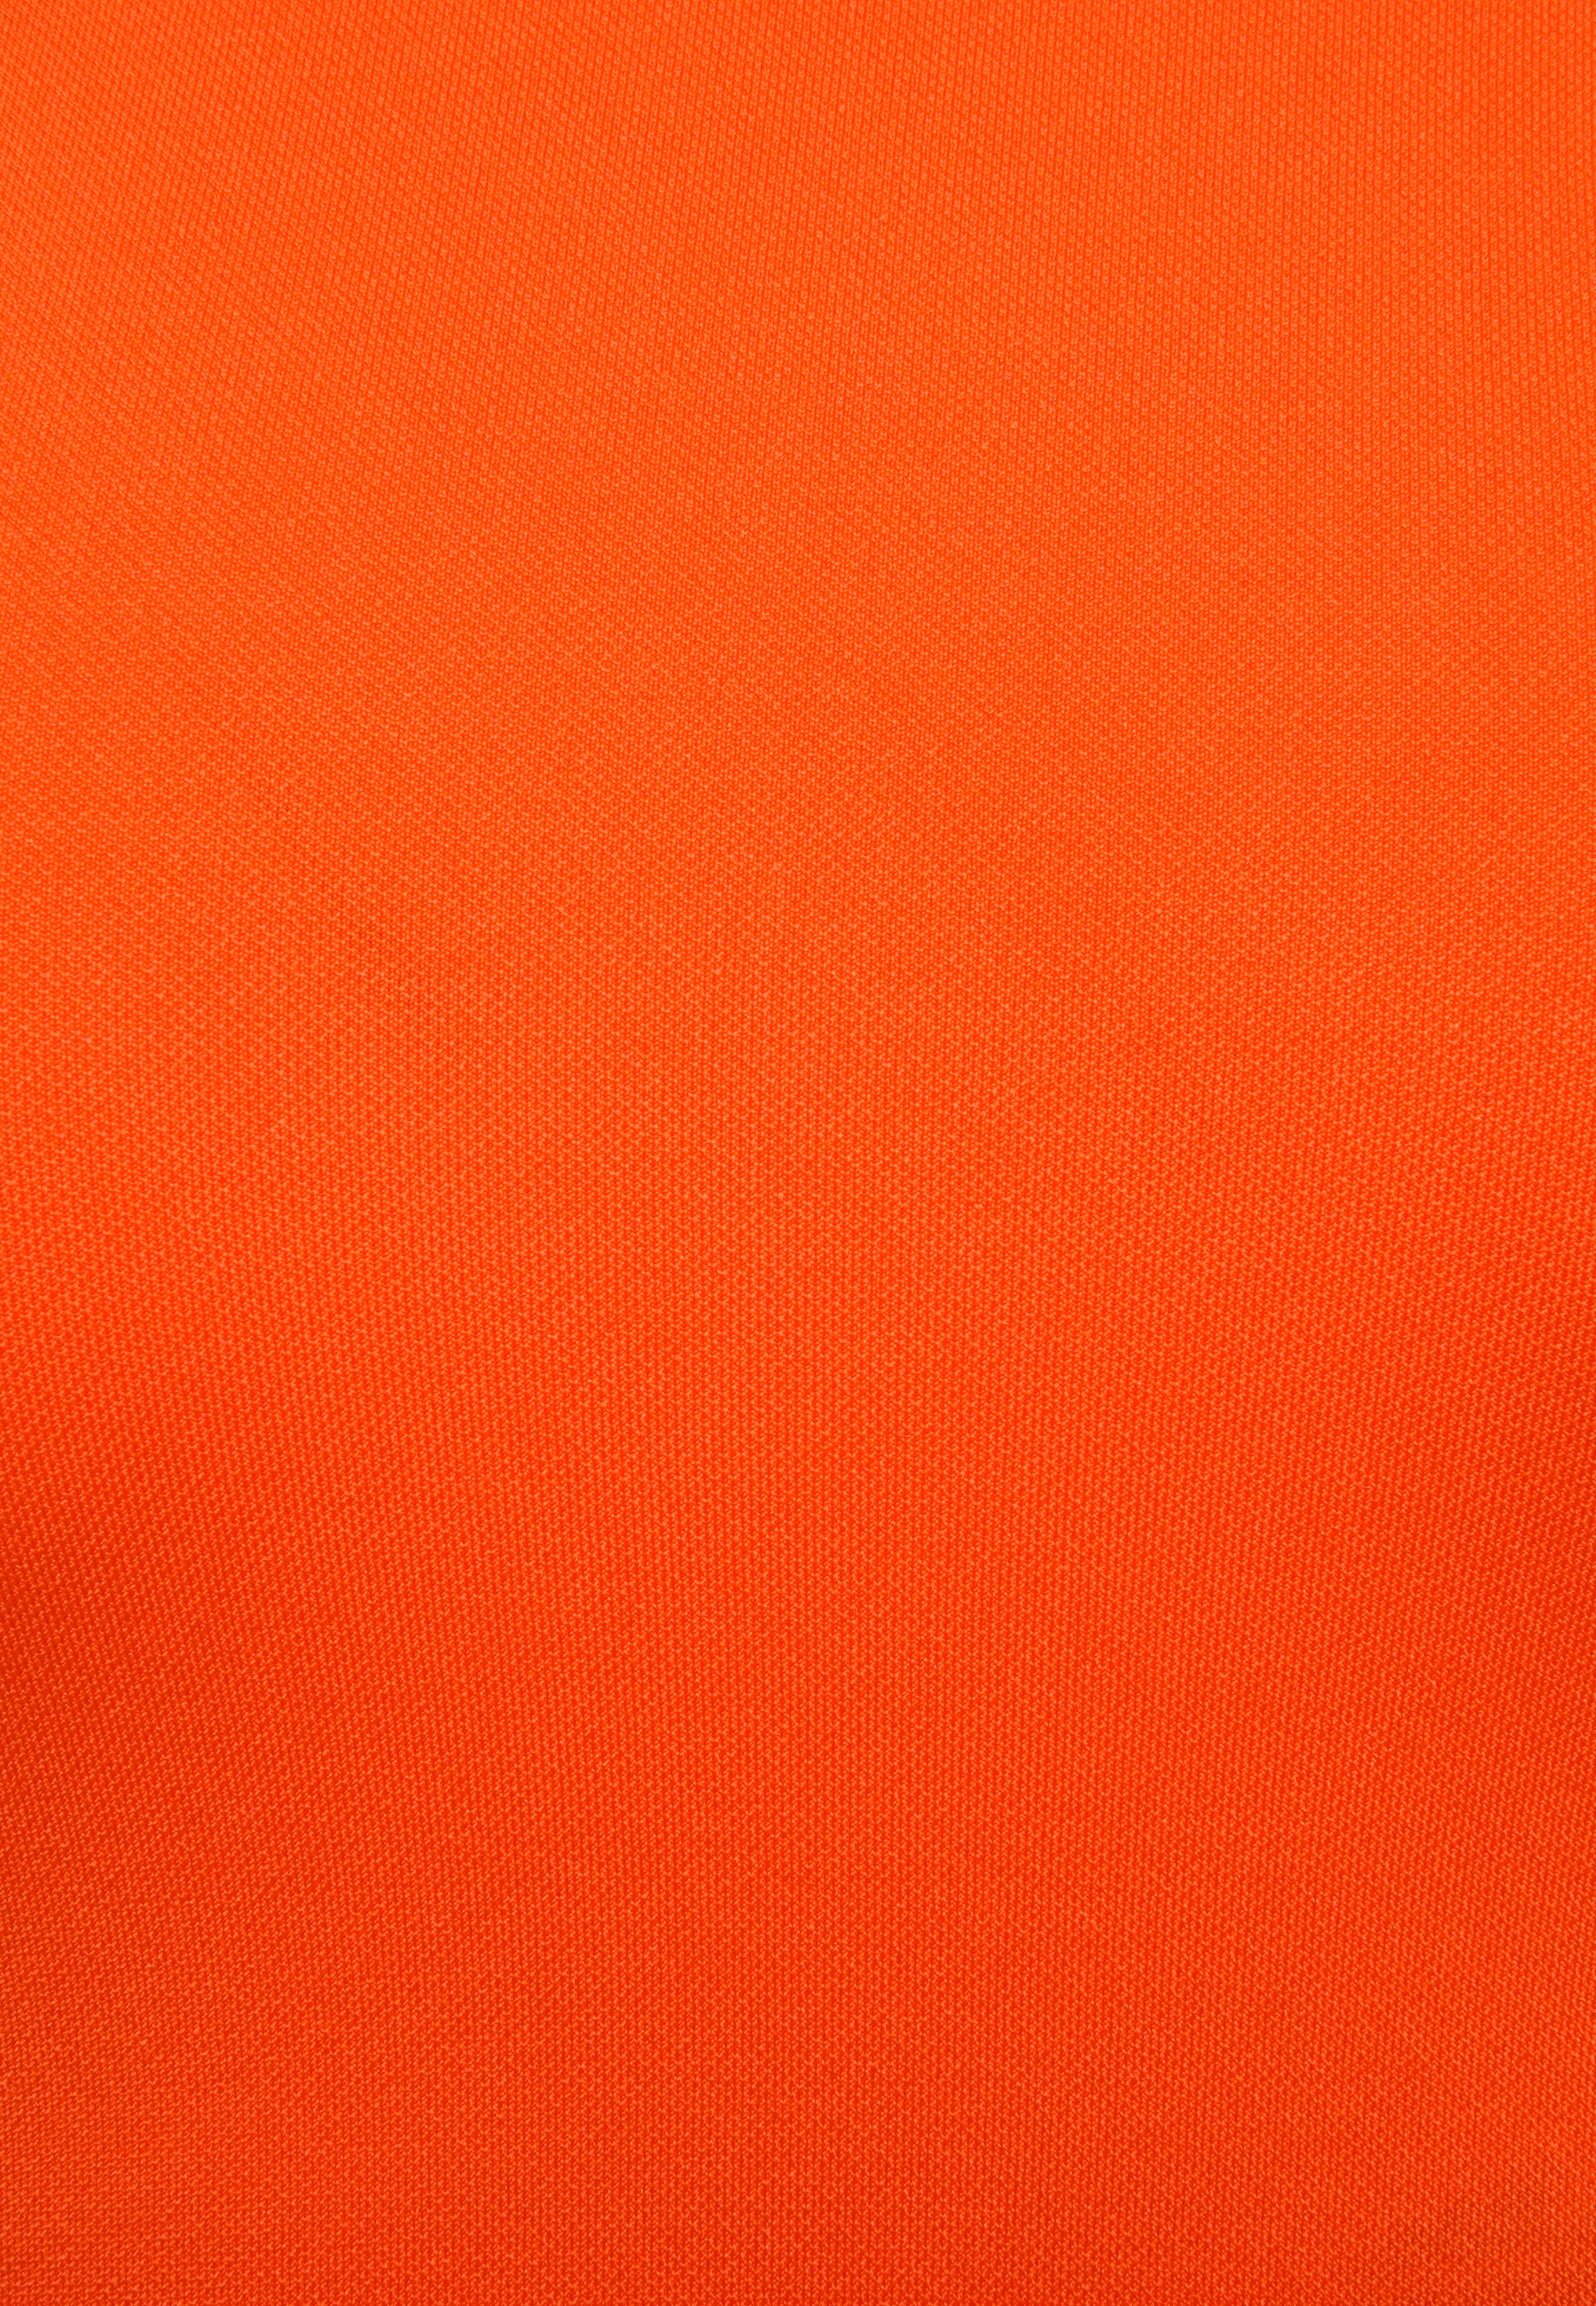 Speedy Long Sleeve Top - Orange-Araa Active